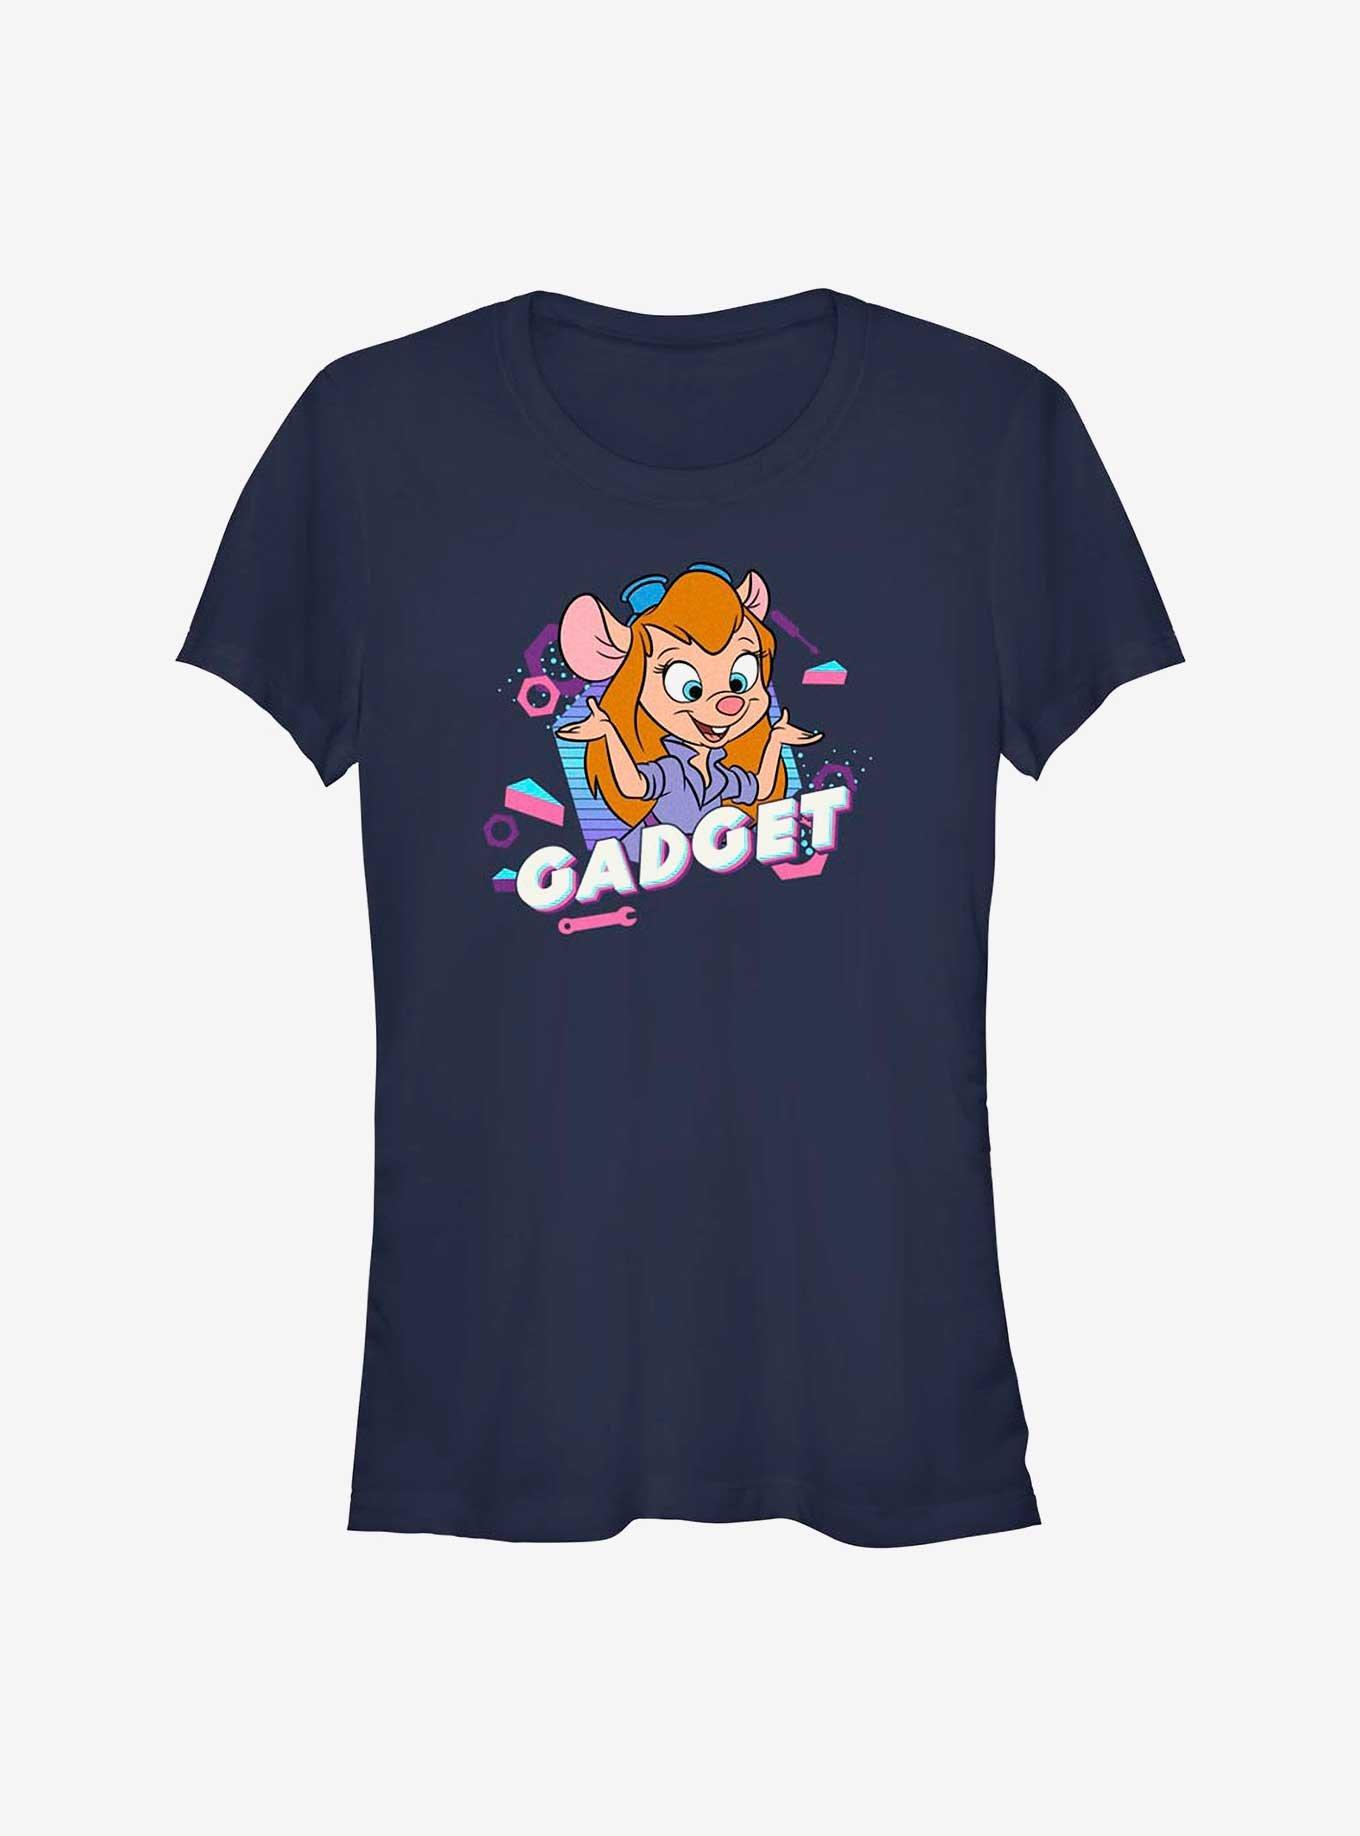 Disney Chip 'n Dale: Rescue Rangers Gadget Girls T-Shirt, NAVY, hi-res